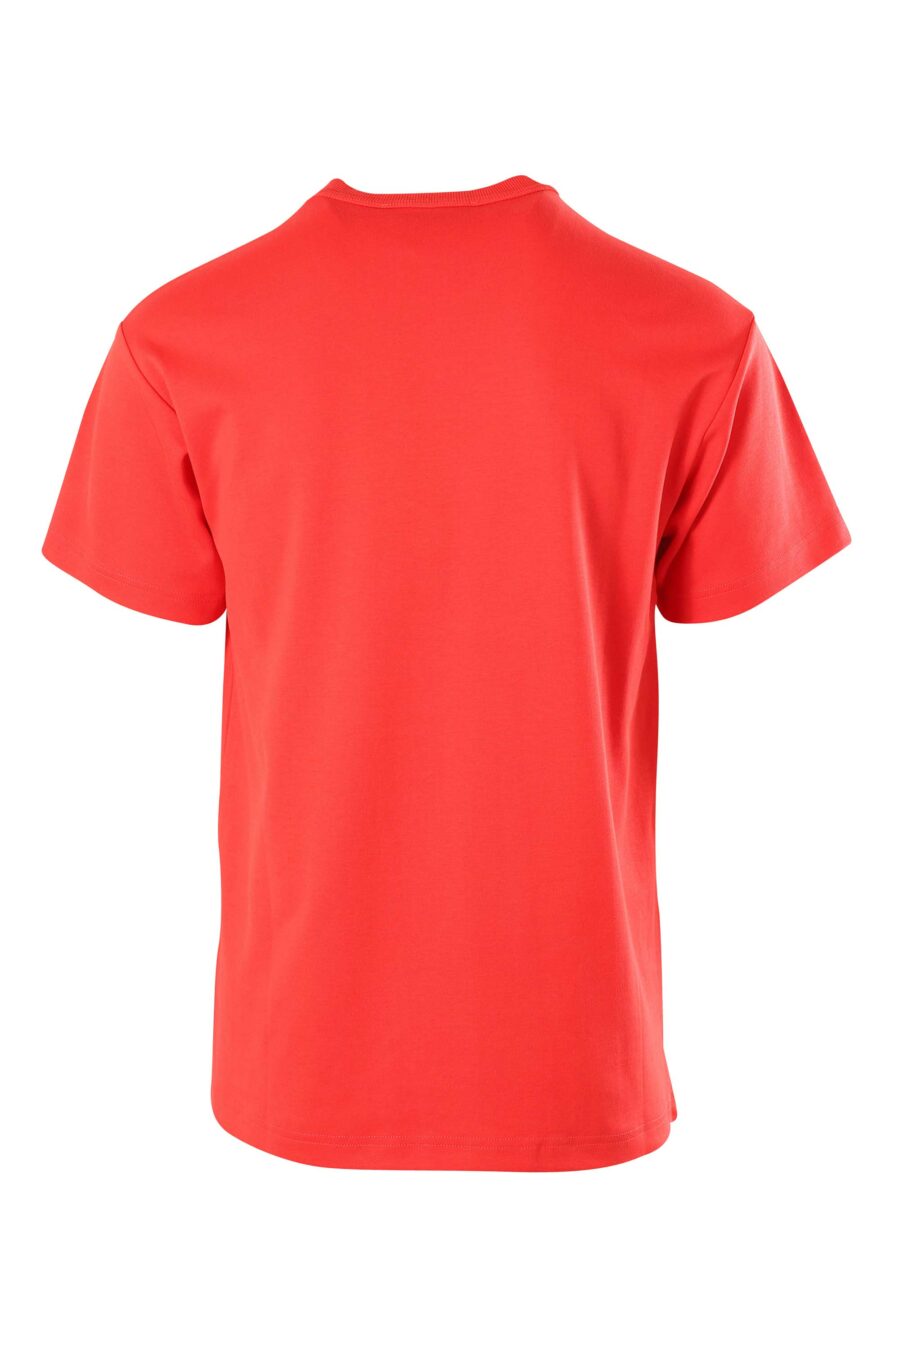 Rotes T-Shirt mit doppelt verflochtenem Logo - 8052019234886 2